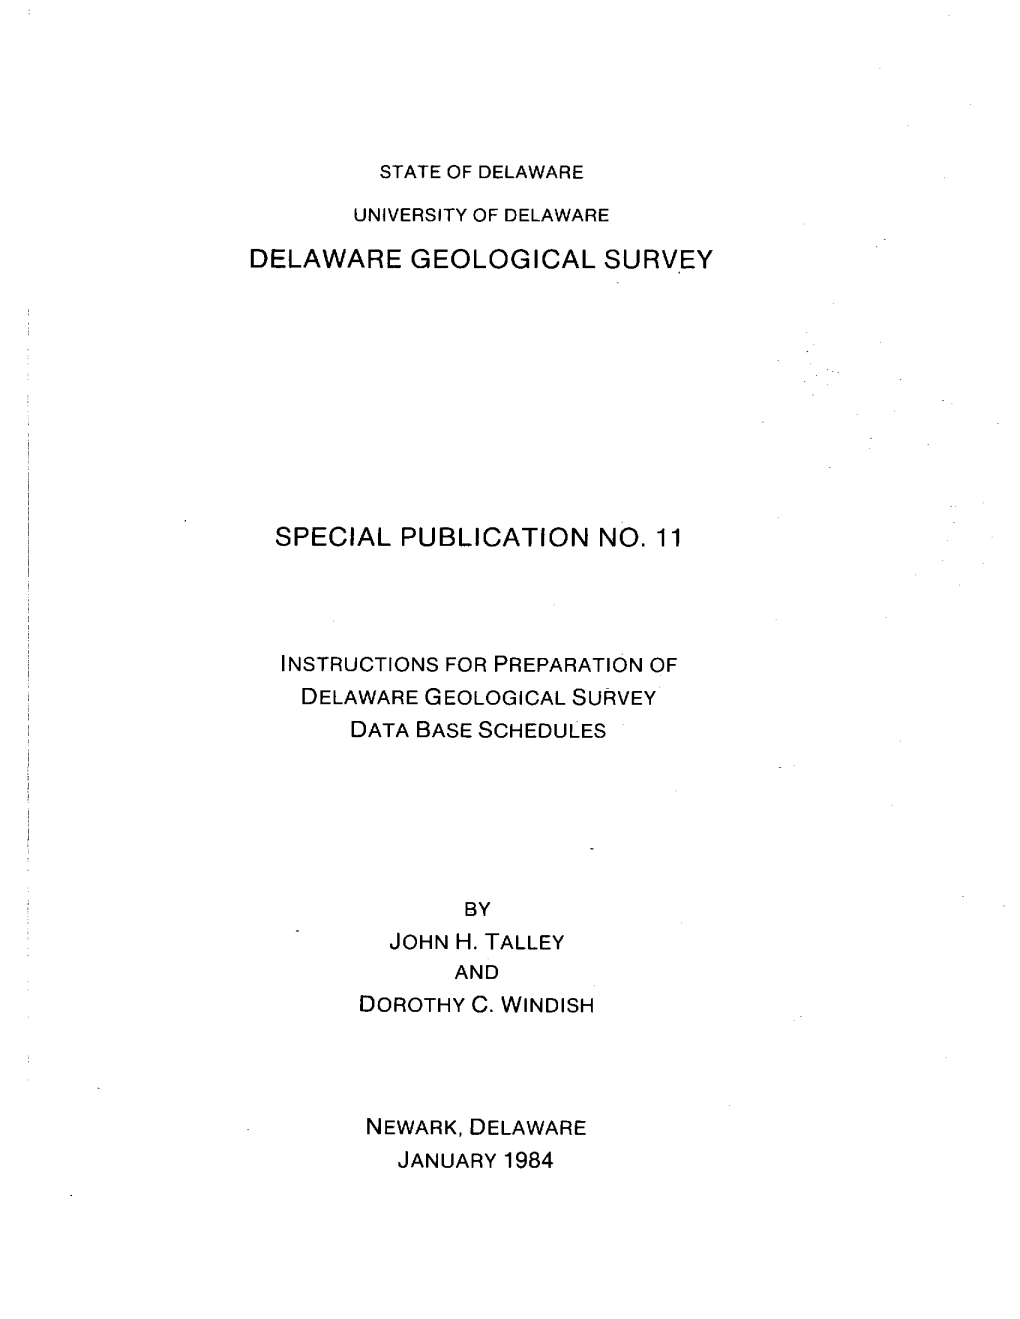 Delaware Geological Survey Special Publication No. 11